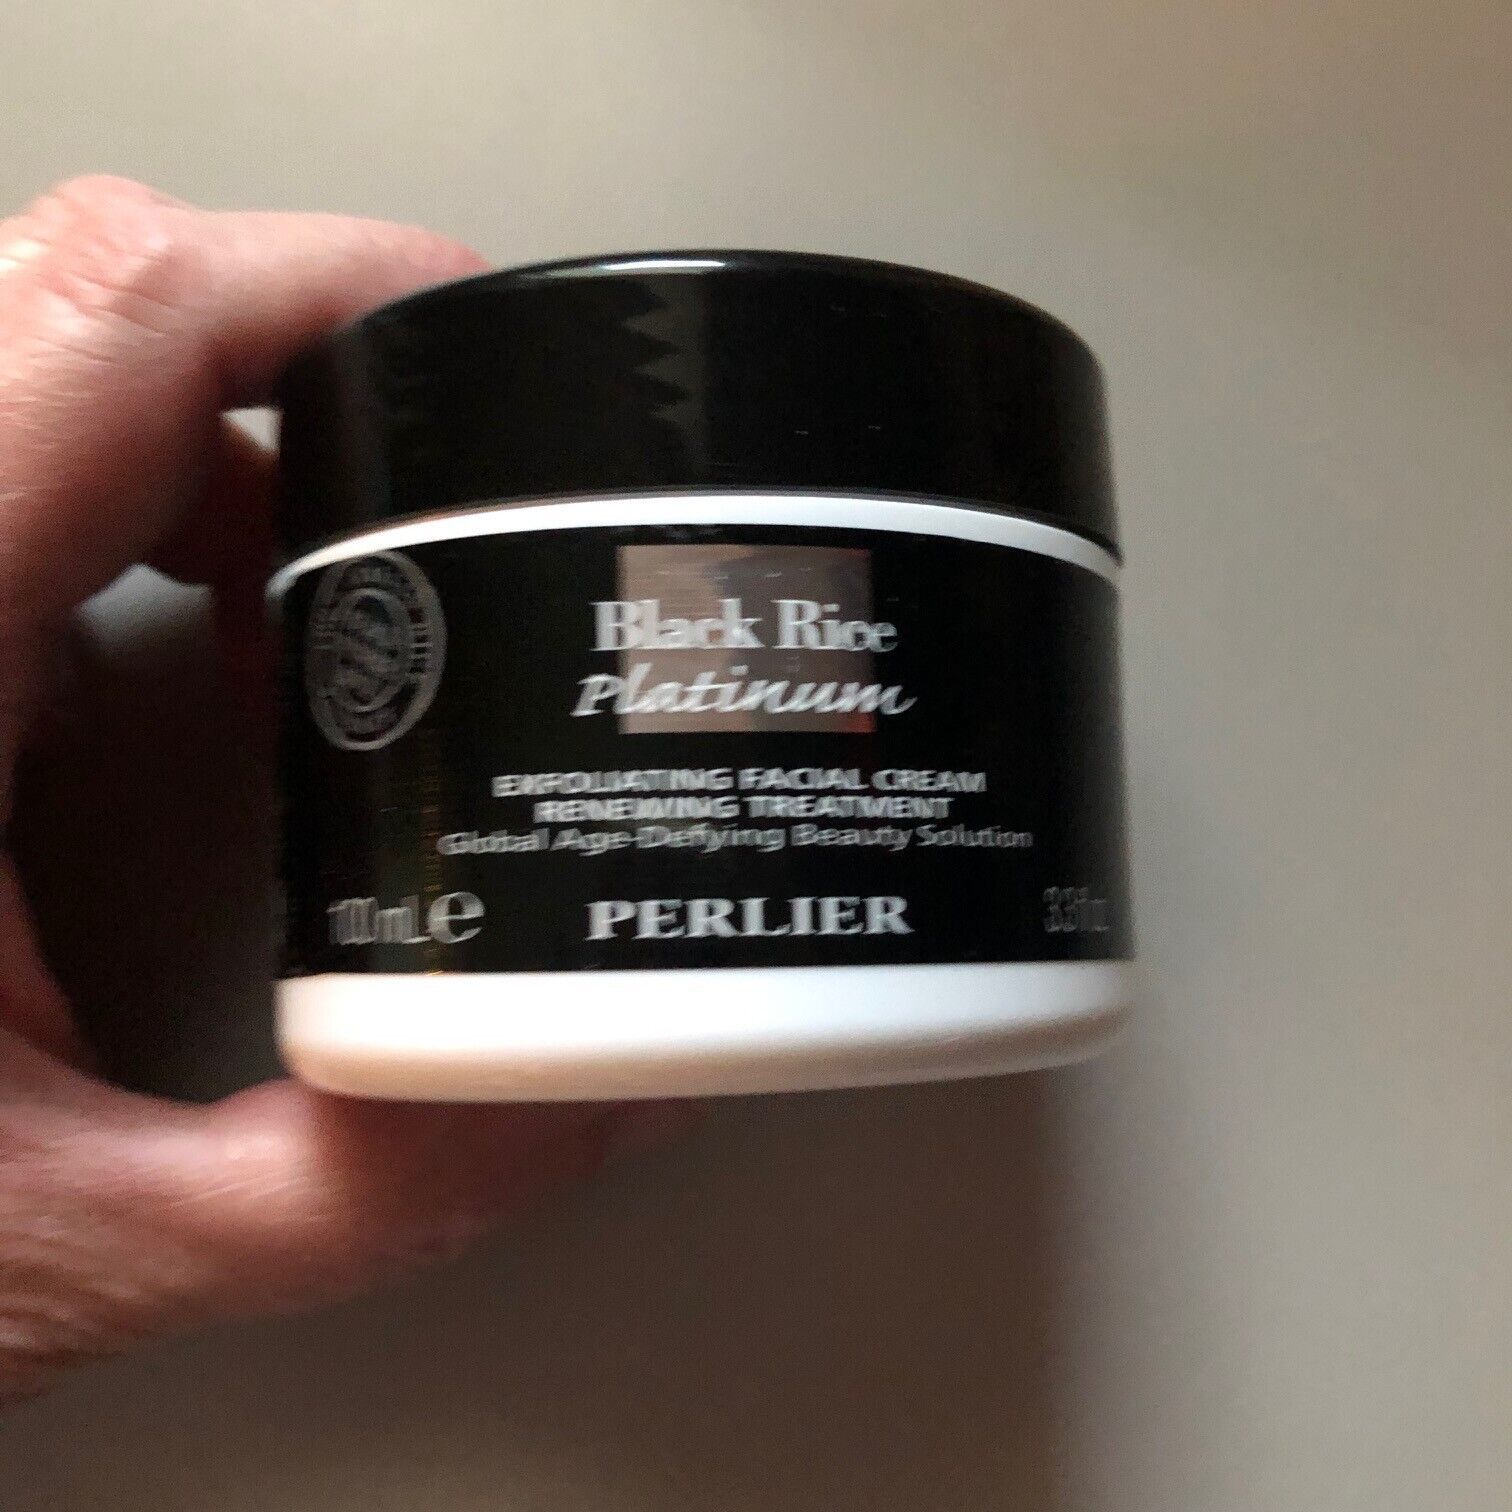 NEW Perlier Black Rice Platinum Exfoliating Facial Cream 3.3 OZ Sealed No Box - $18.80